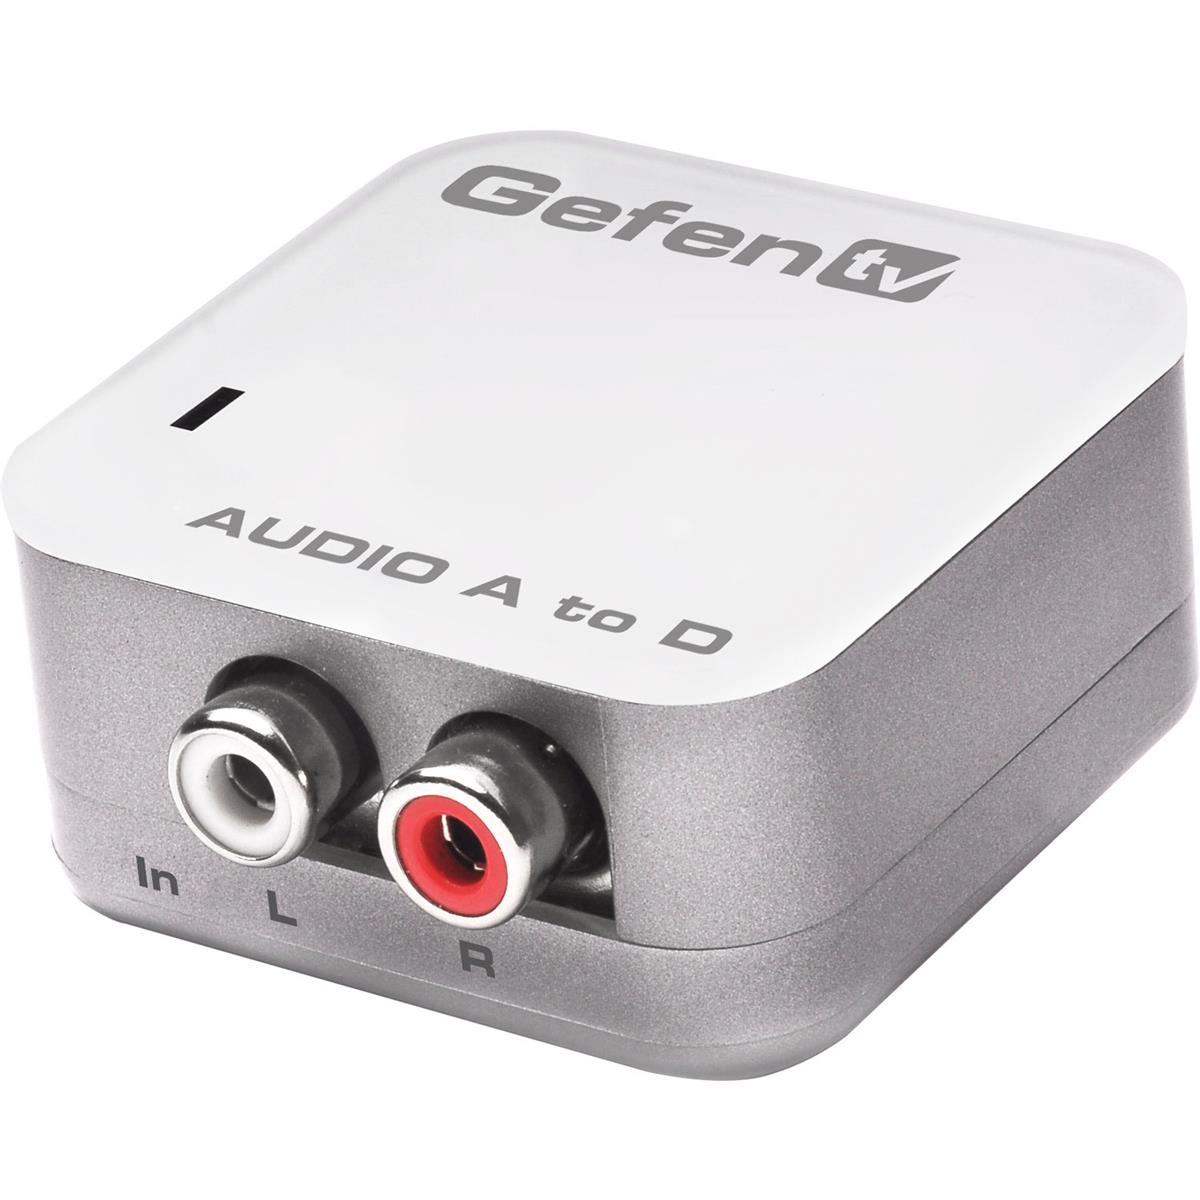 Image of Gefen Analog to Digital Audio Adapter